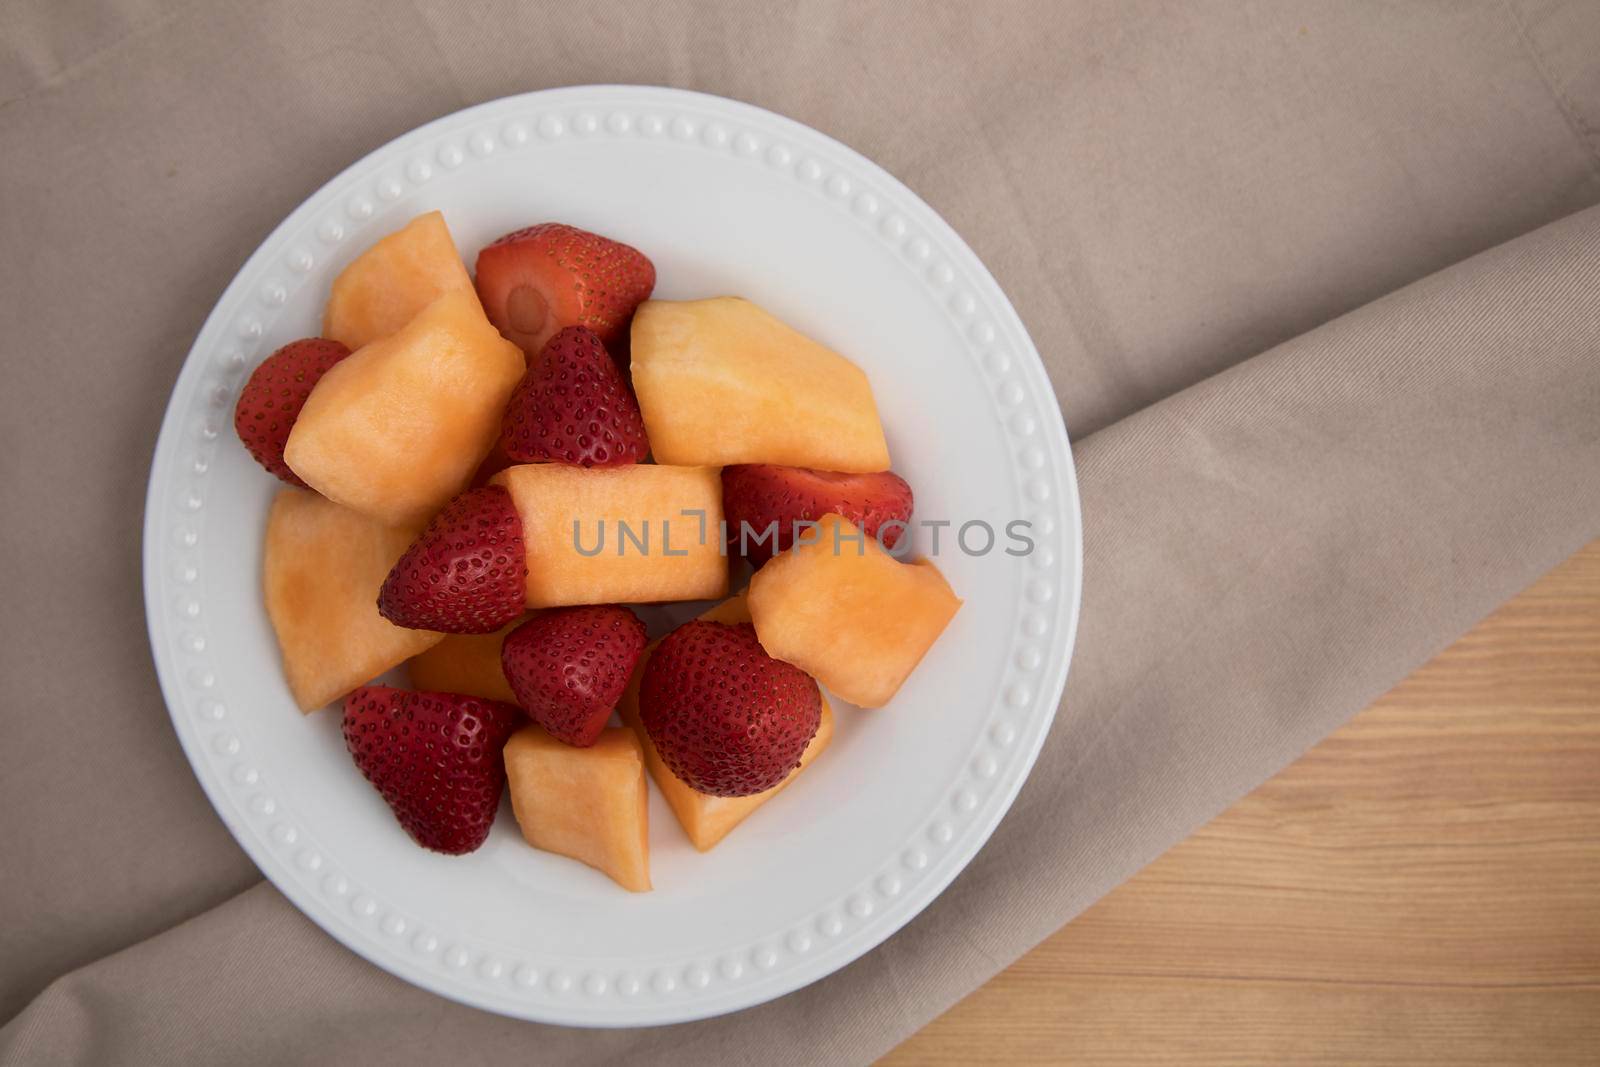 Cantaloupe and Strawberries by charlotteLake